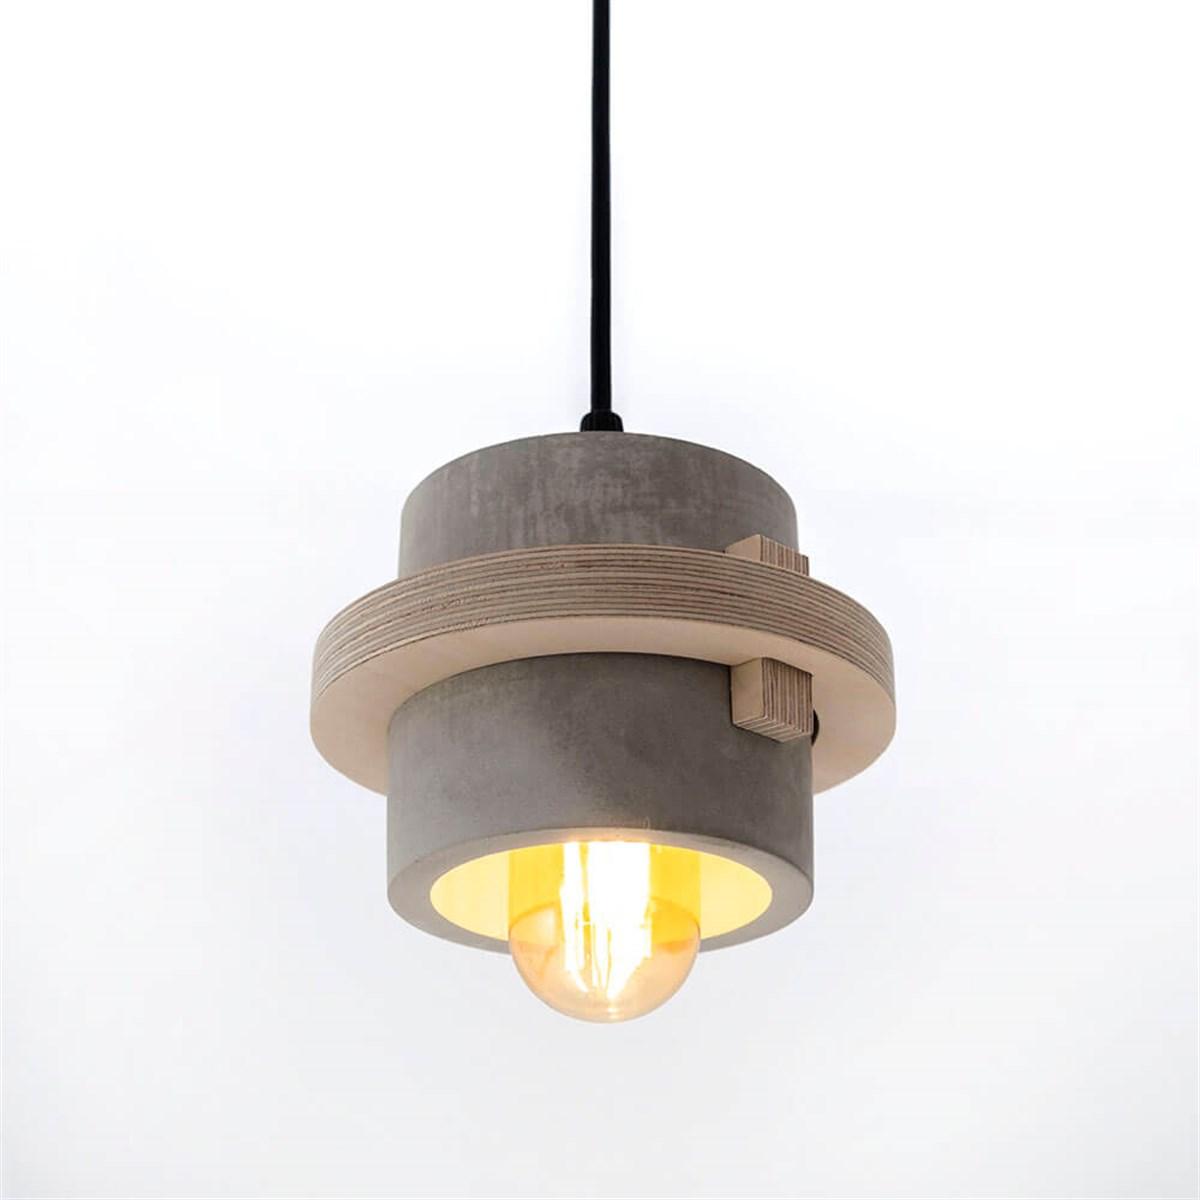 Decorative Concrete & Wood Pendant Lighting - Qavunco